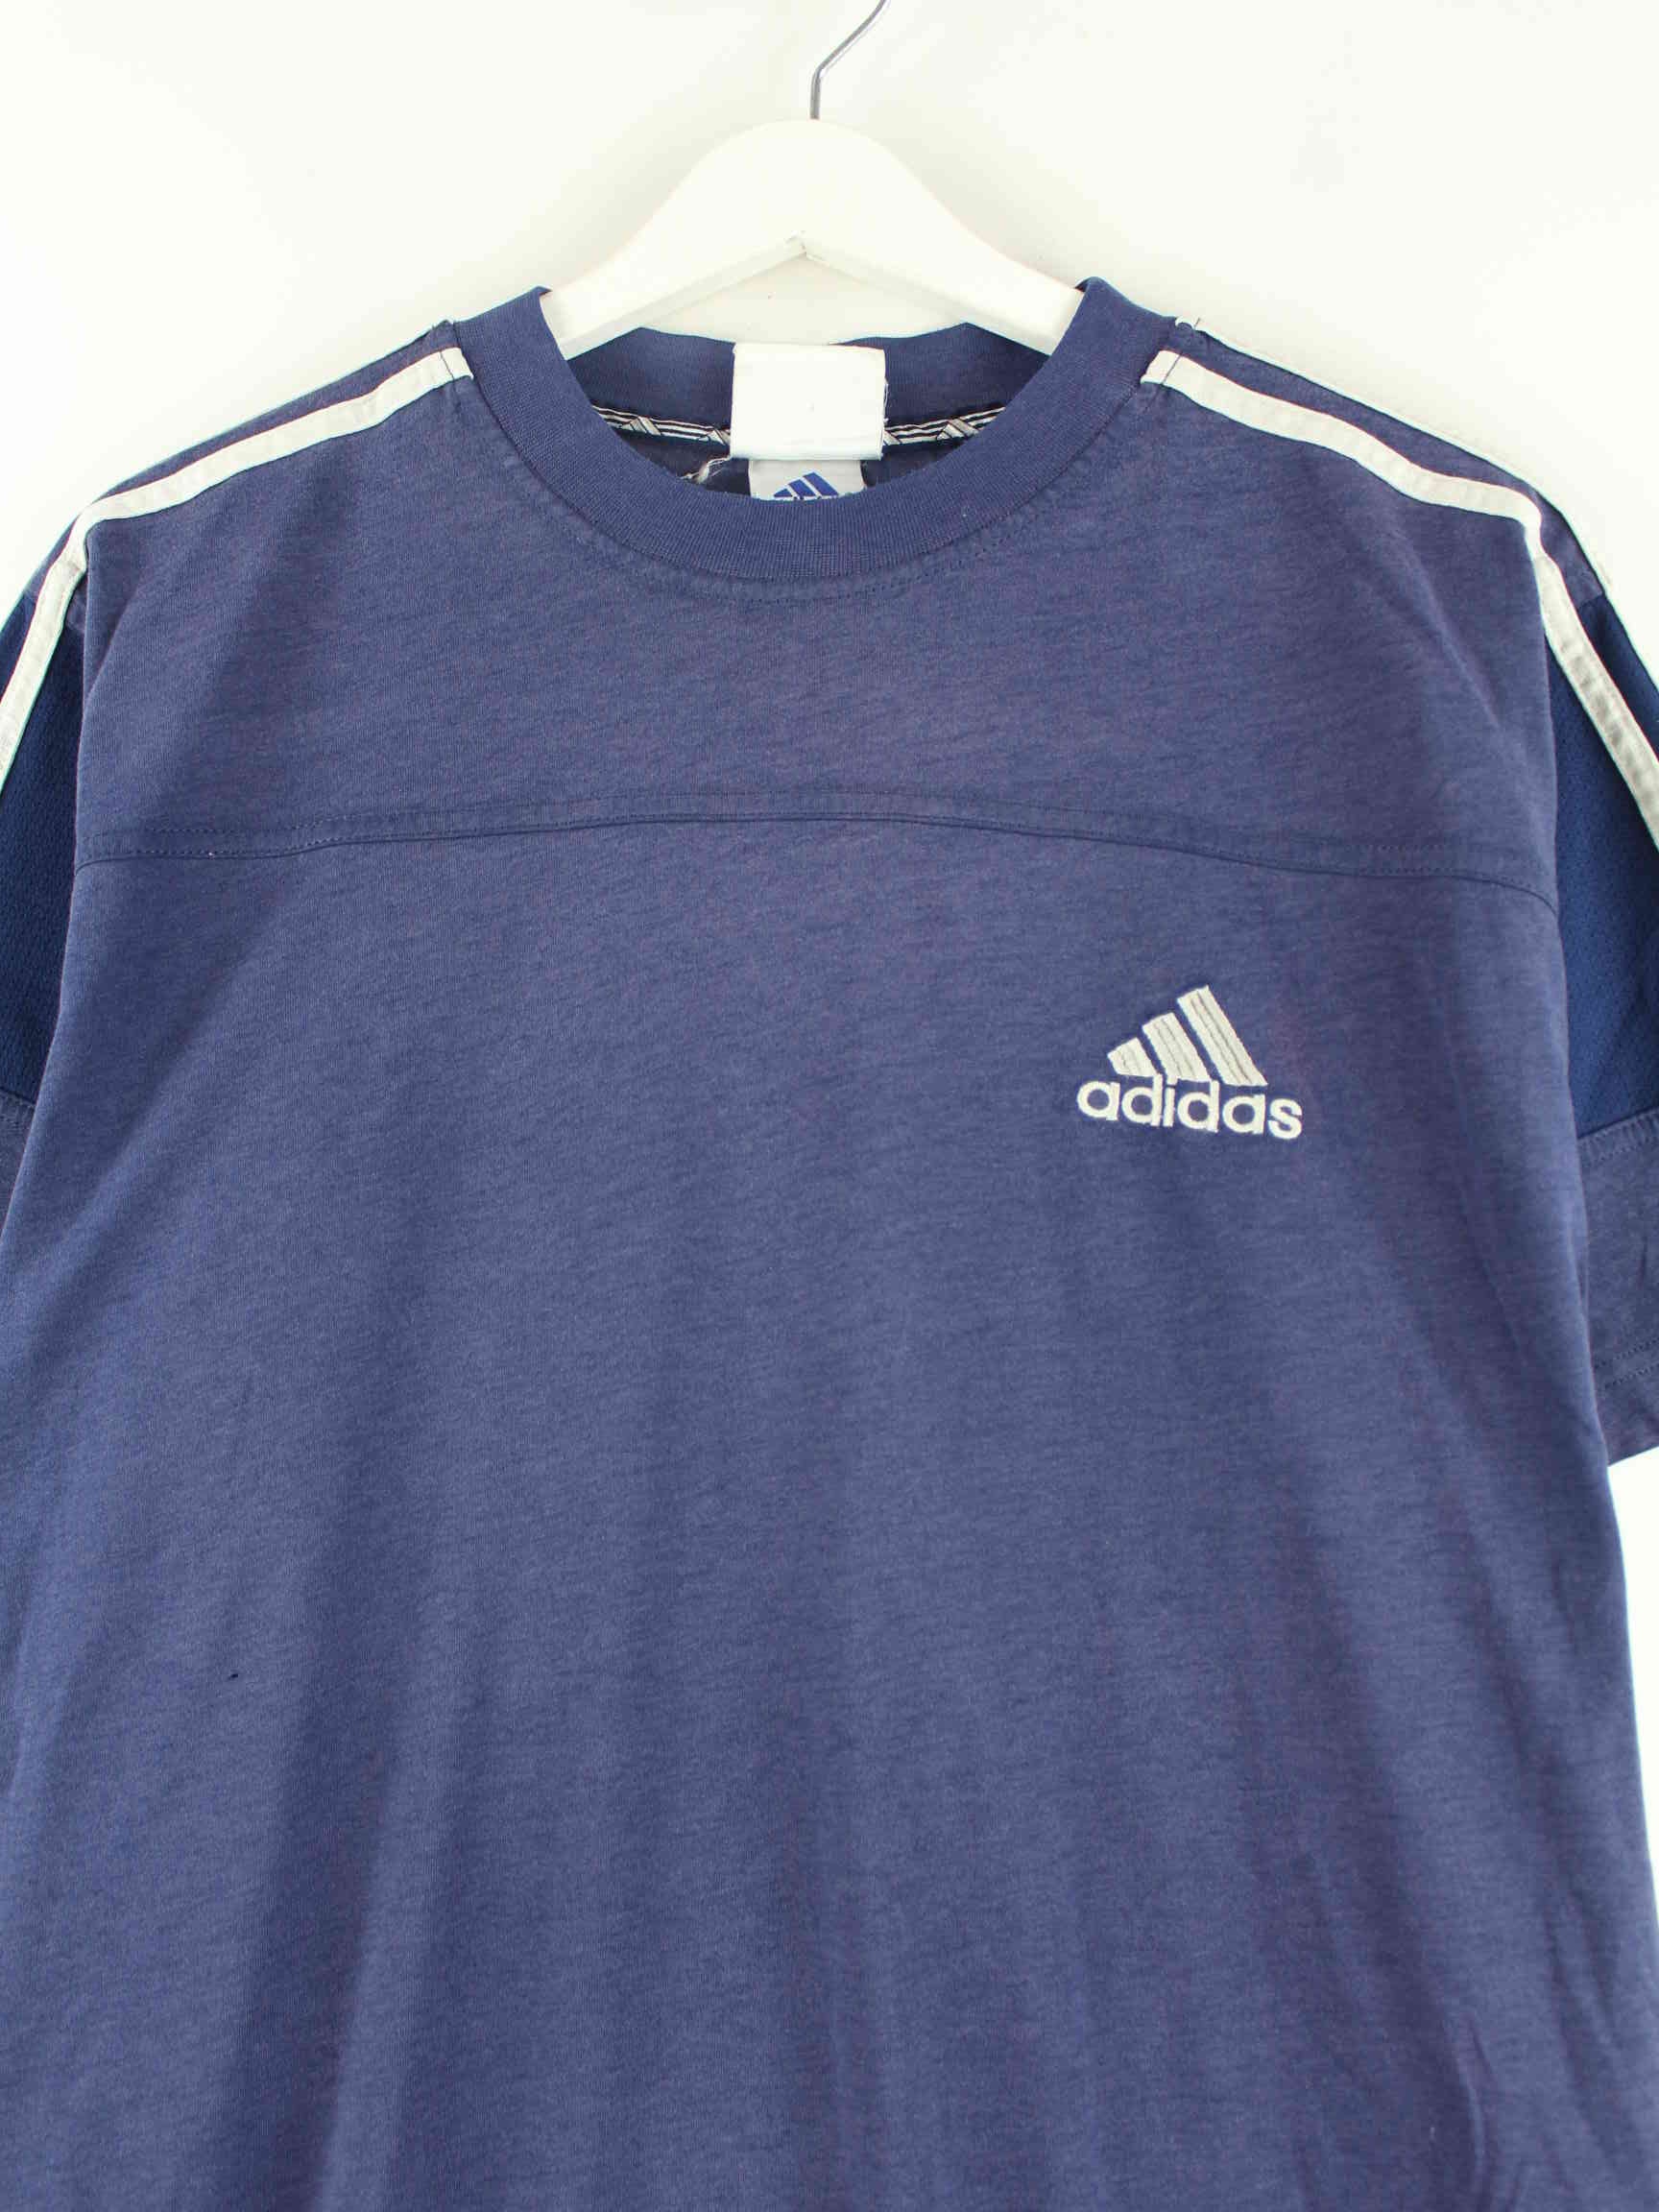 Adidas 90s Vintage Basic T-Shirt Blau L (detail image 1)